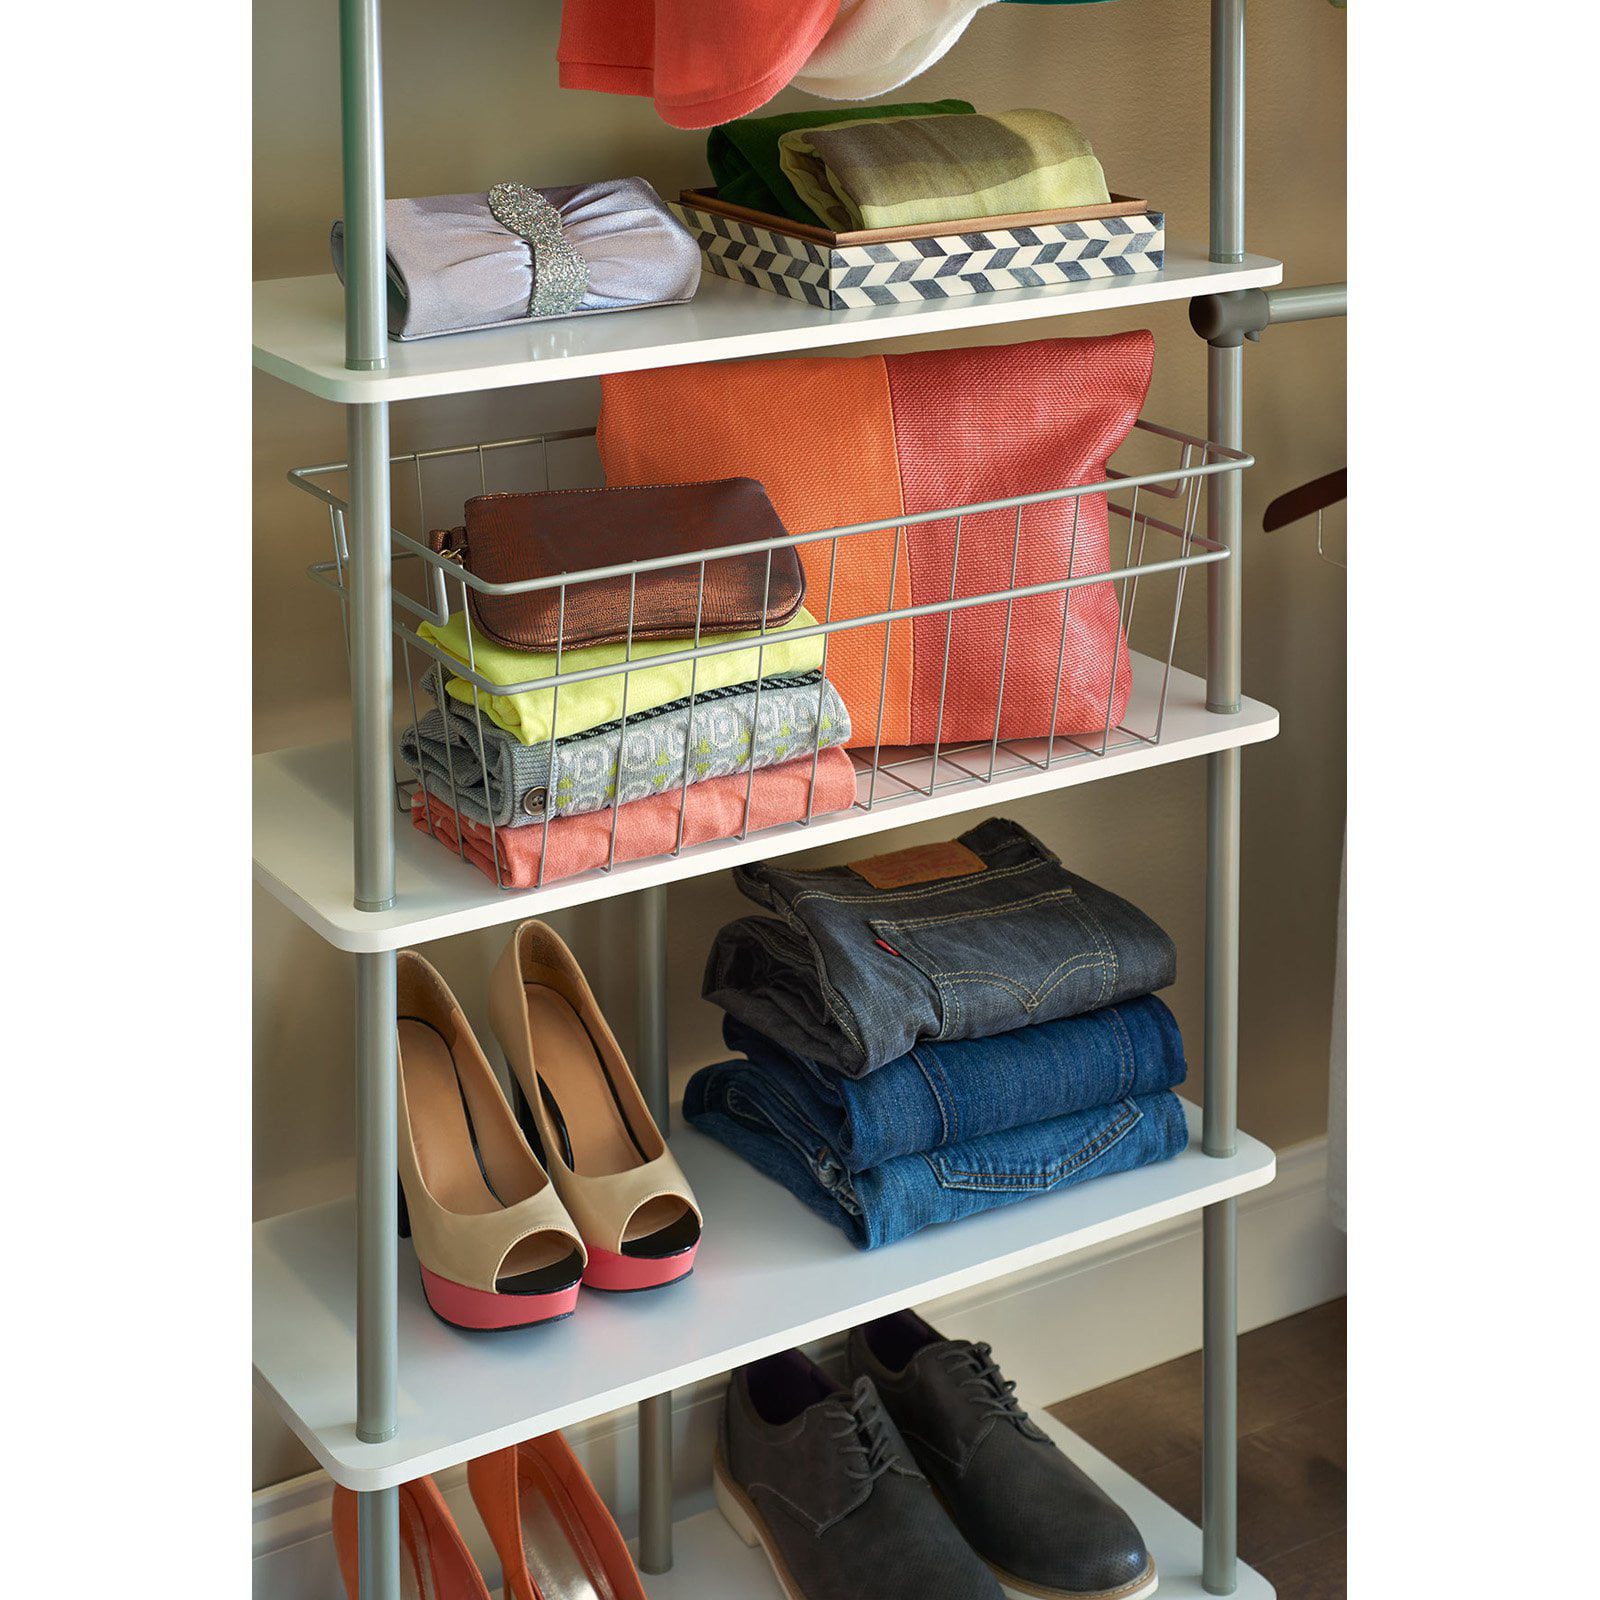 RIHUD Storage Baskets for Shelves 18.5x10.5x8in Closet Storage